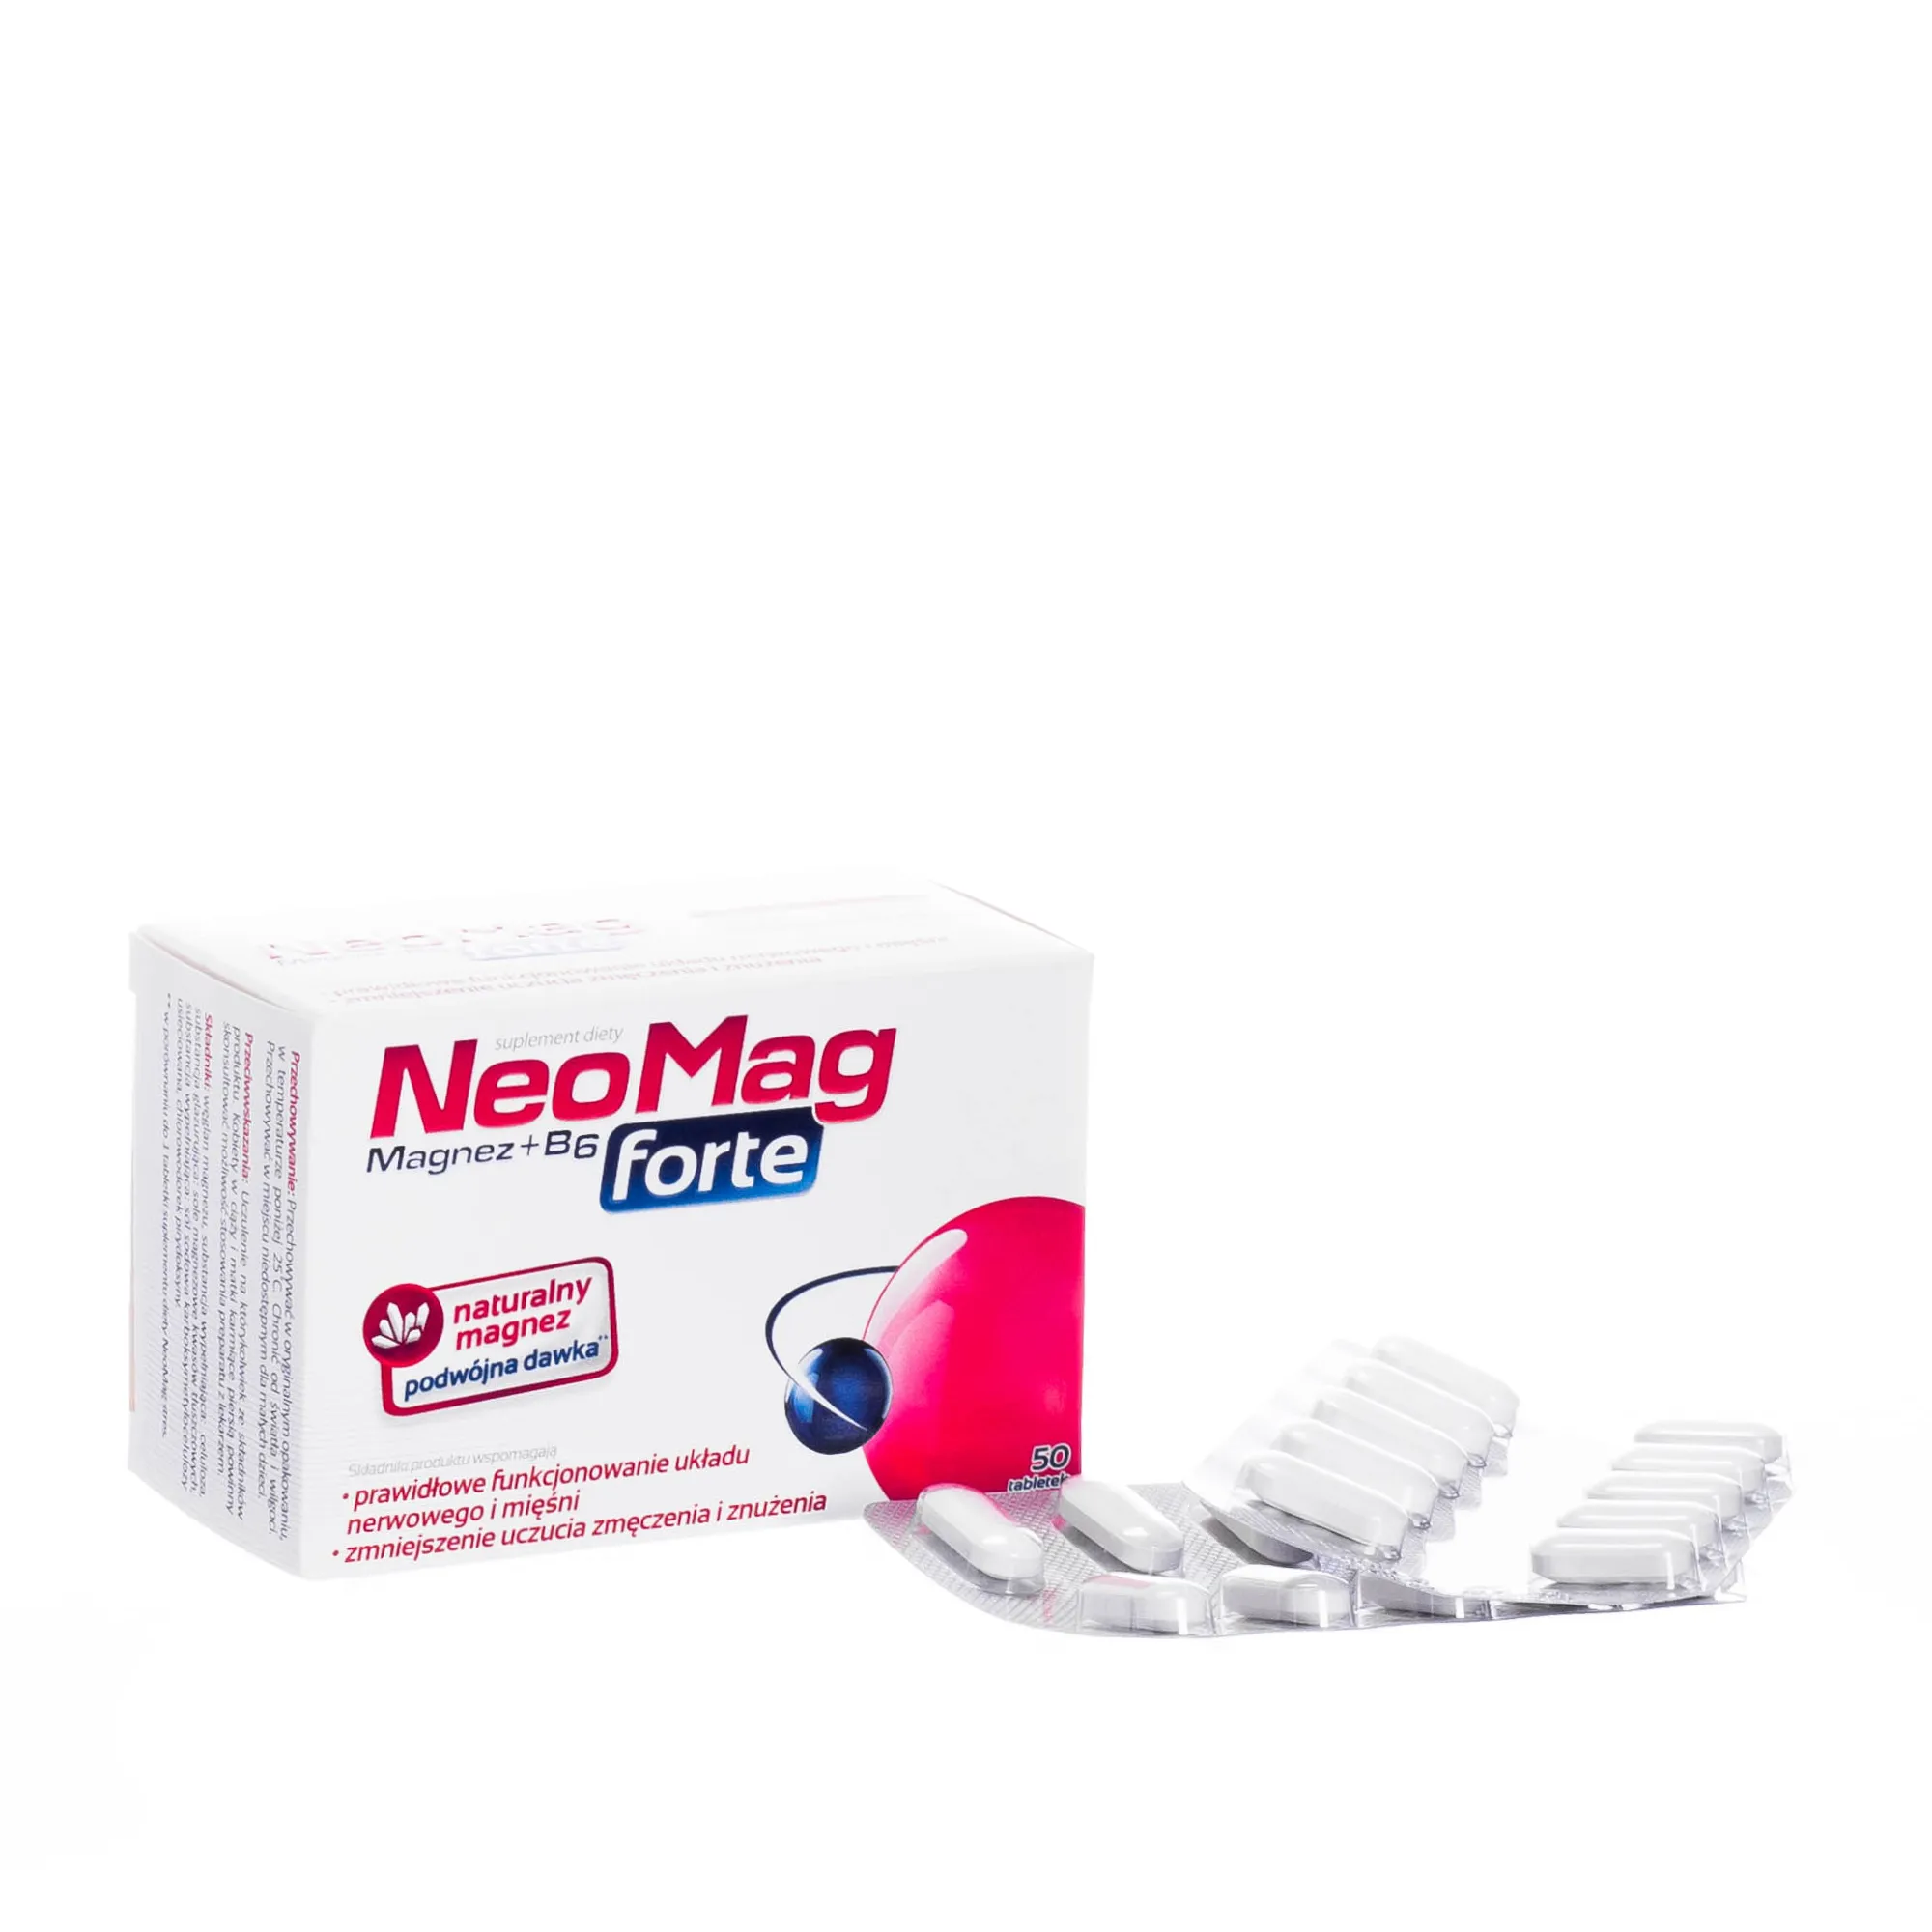 NeoMag forte - suplement diety bogaty w magnez i witaminę B6, 50 tabletek.